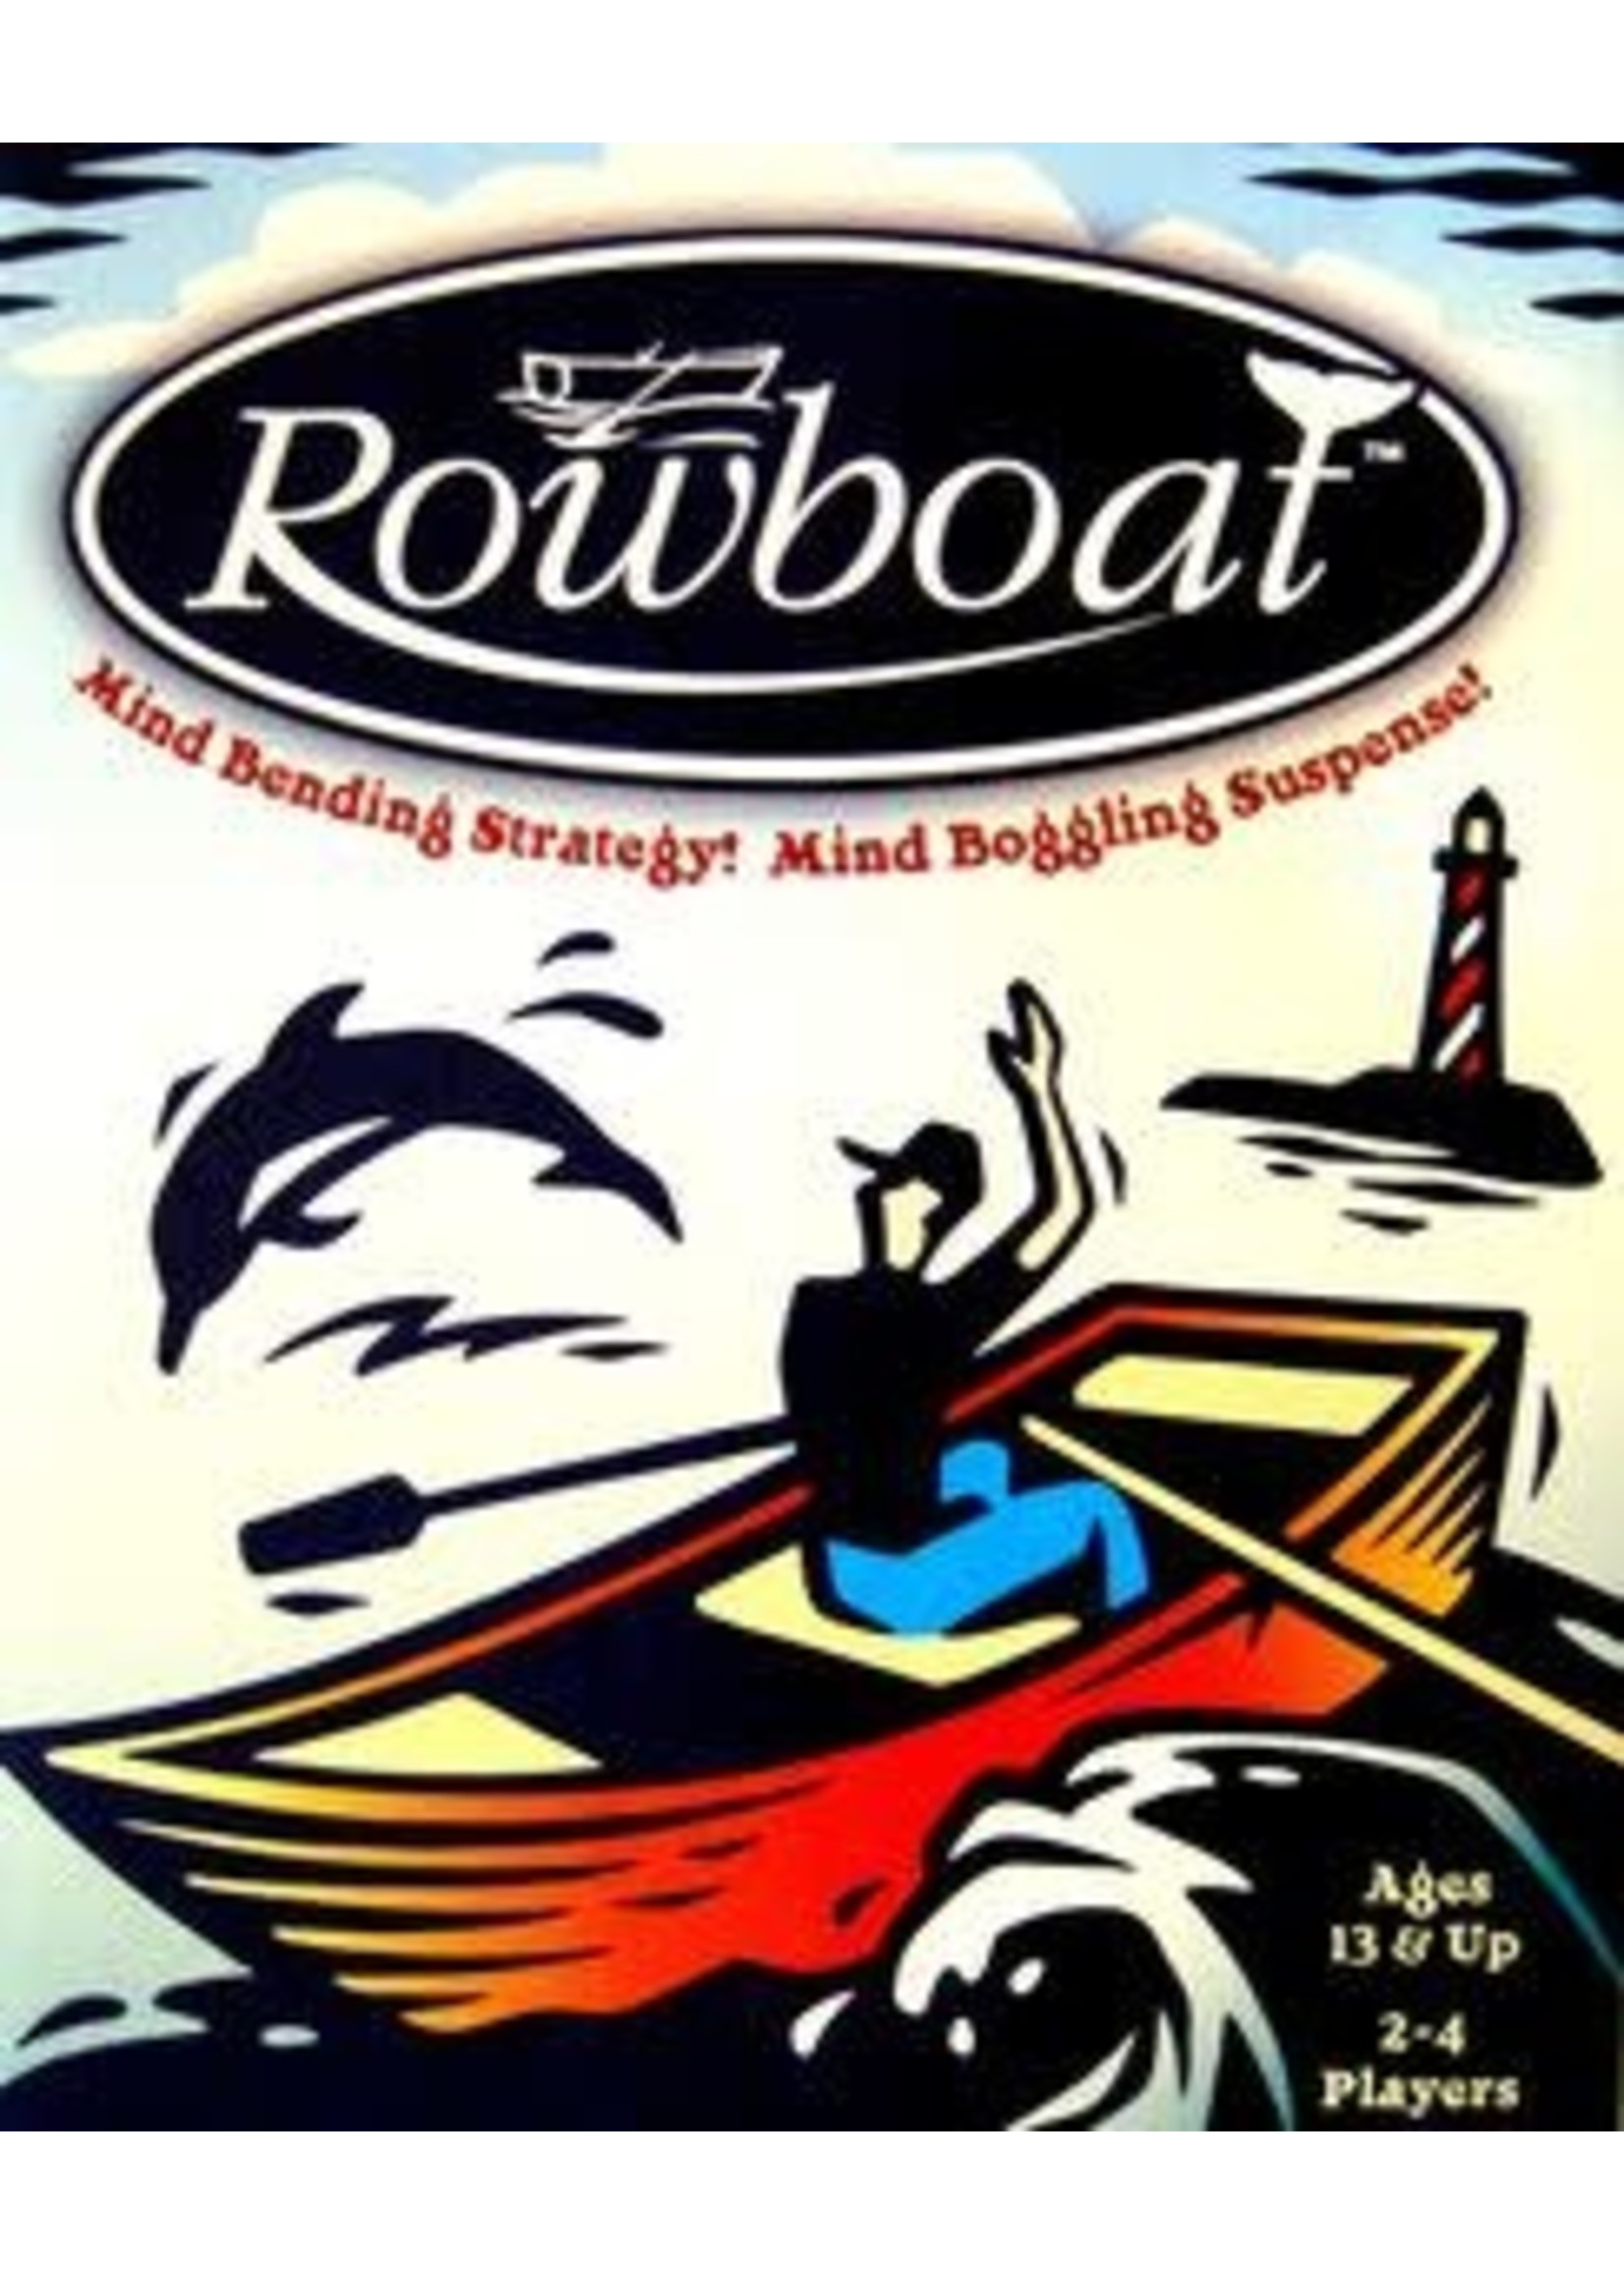 RENTAL - Rowboat 6.6 oz